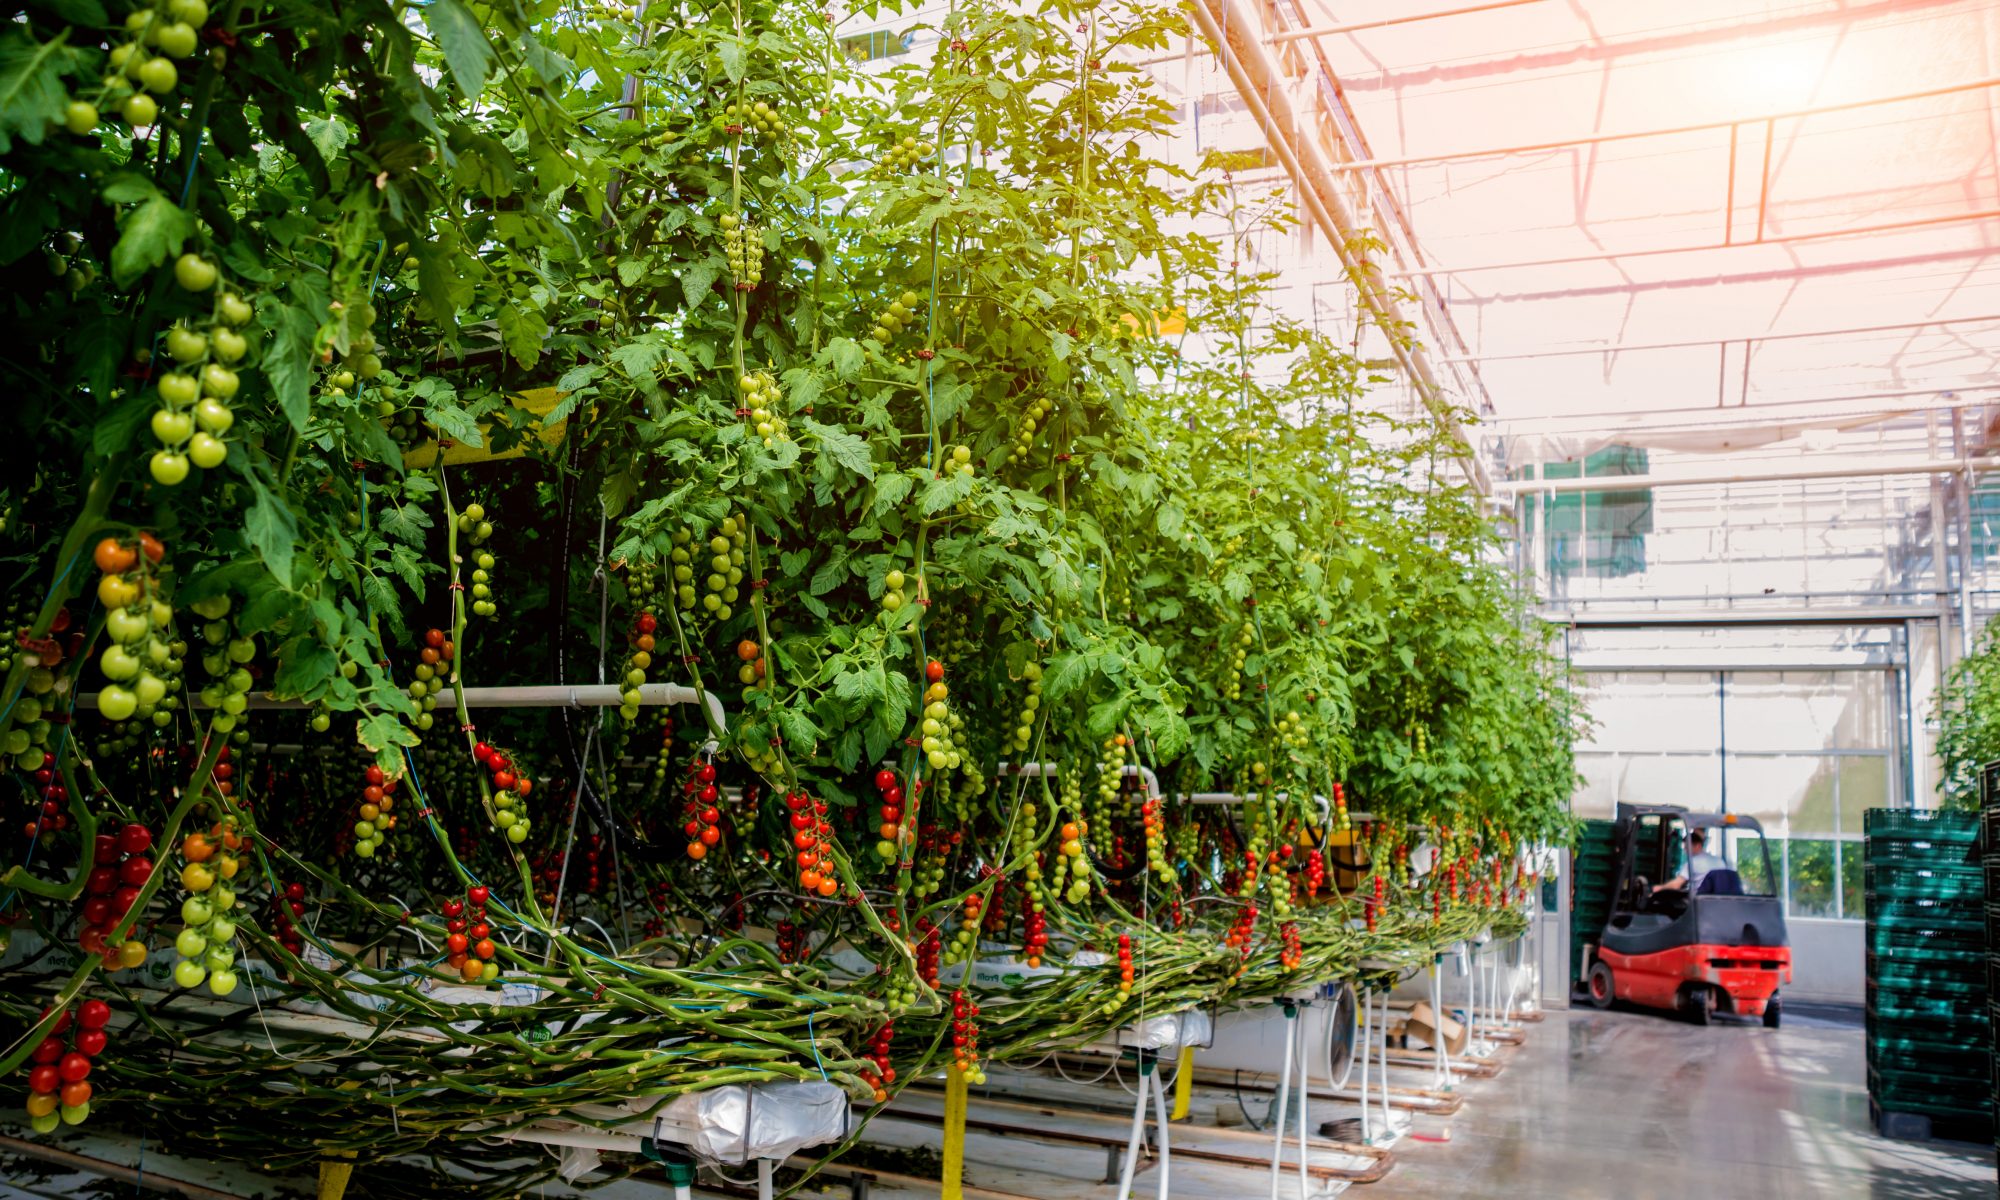 Smart Greenhouses